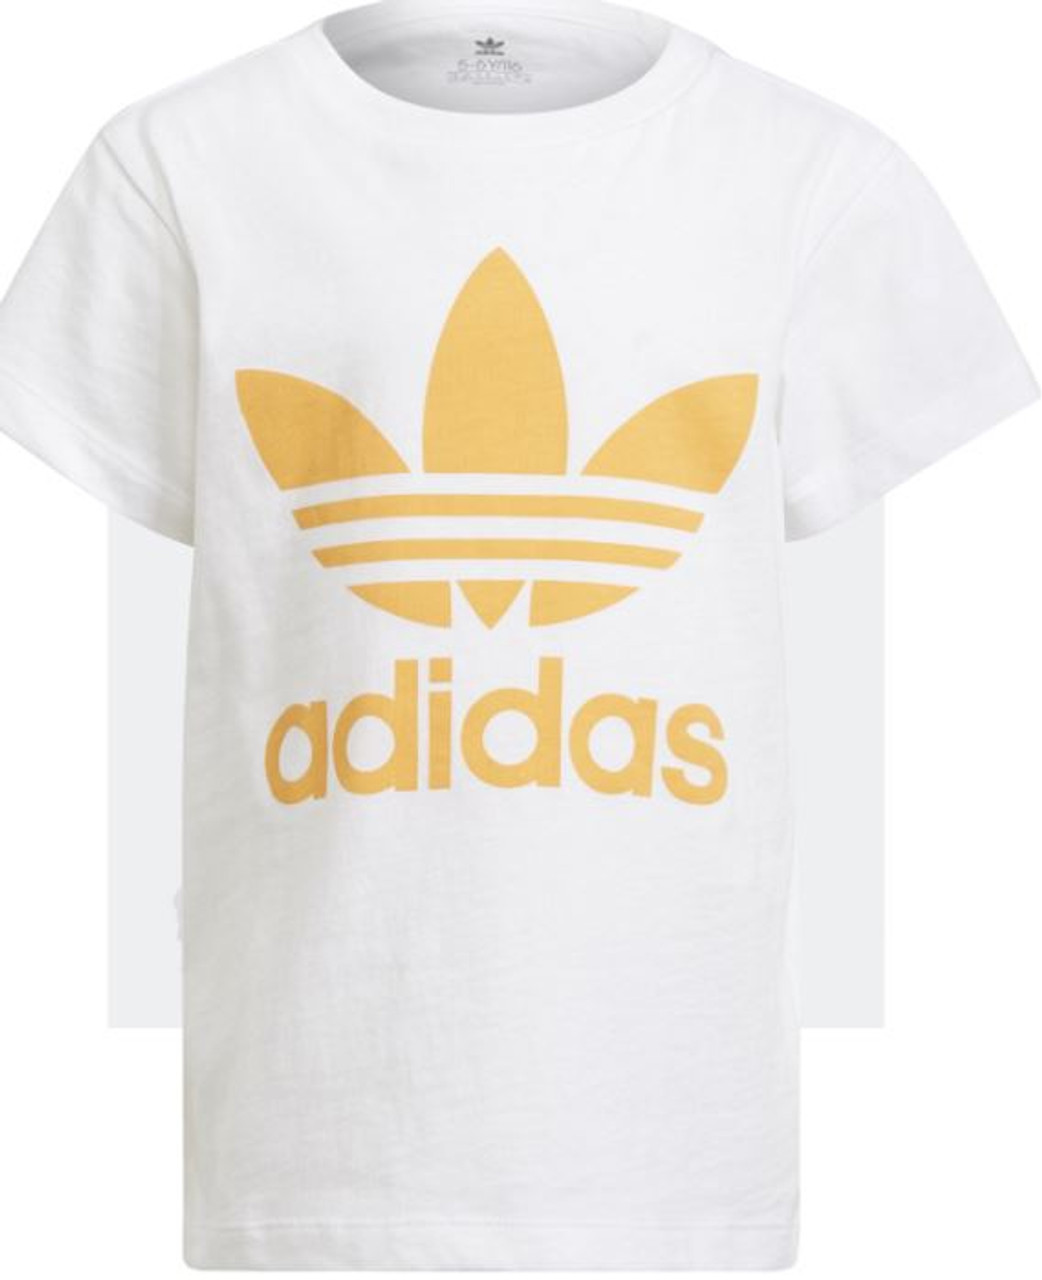 Adidas Trefoil T Shirt SS Boy's, White Hazey Orange, Large - Discount  Scrubs and Fashion